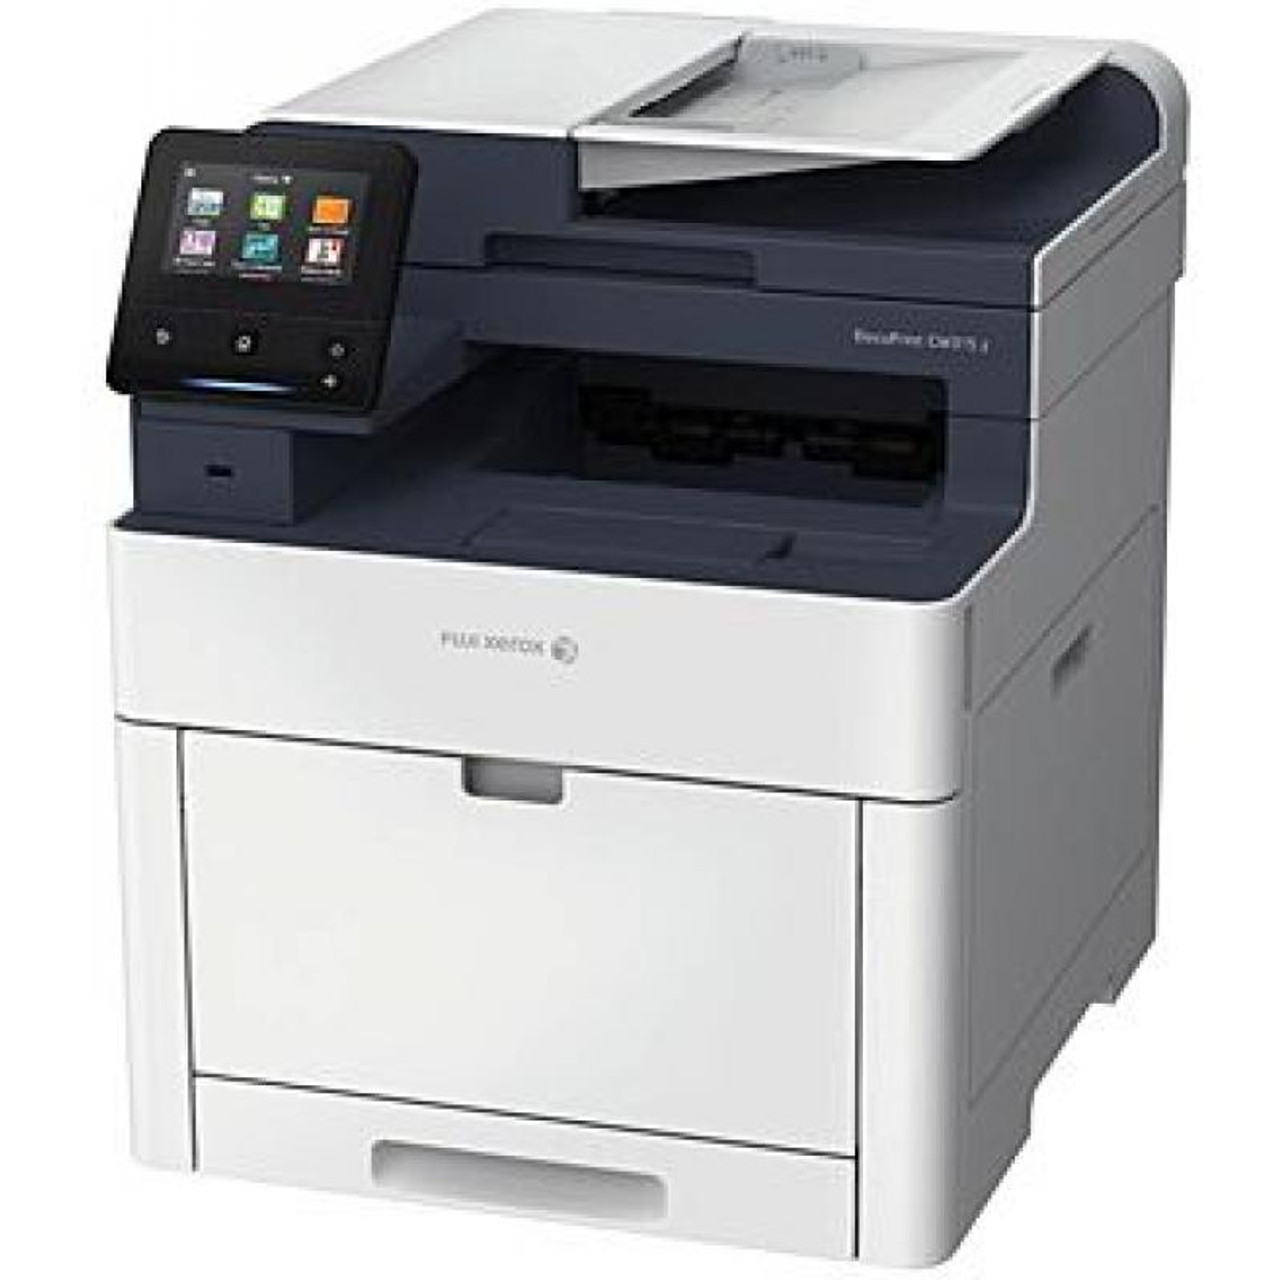 Fuji Xerox Docuprint Cm315z A4 Colour Laser Multifunction Printer Mediaform Au 3111